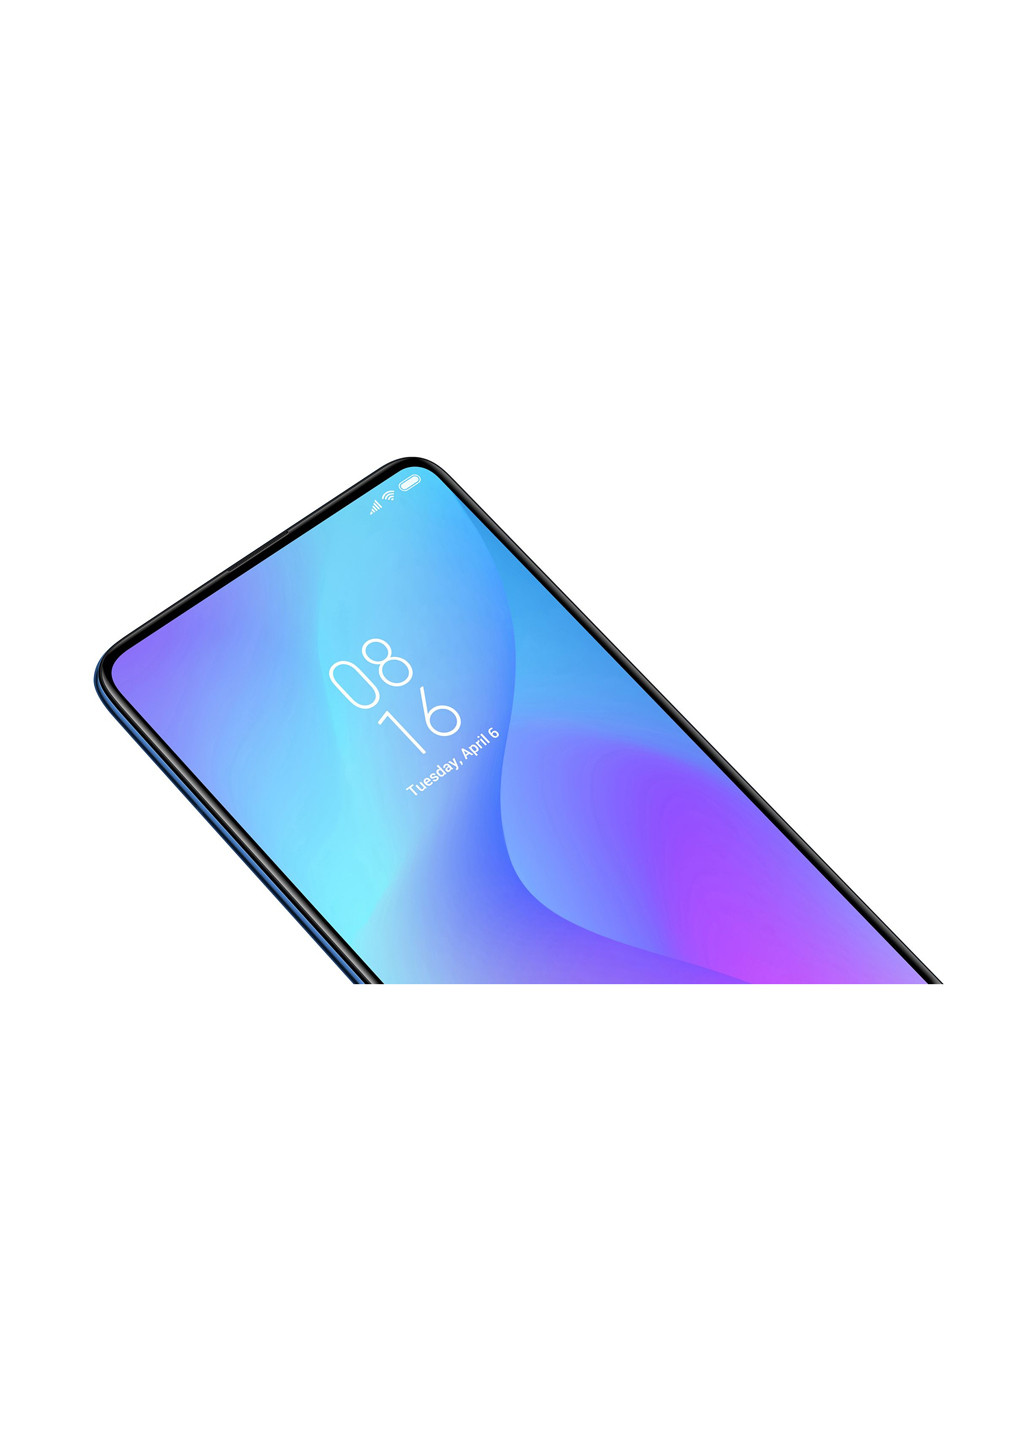 Смартфон Xiaomi mi 9t 6/64gb glacier blue (136094499)